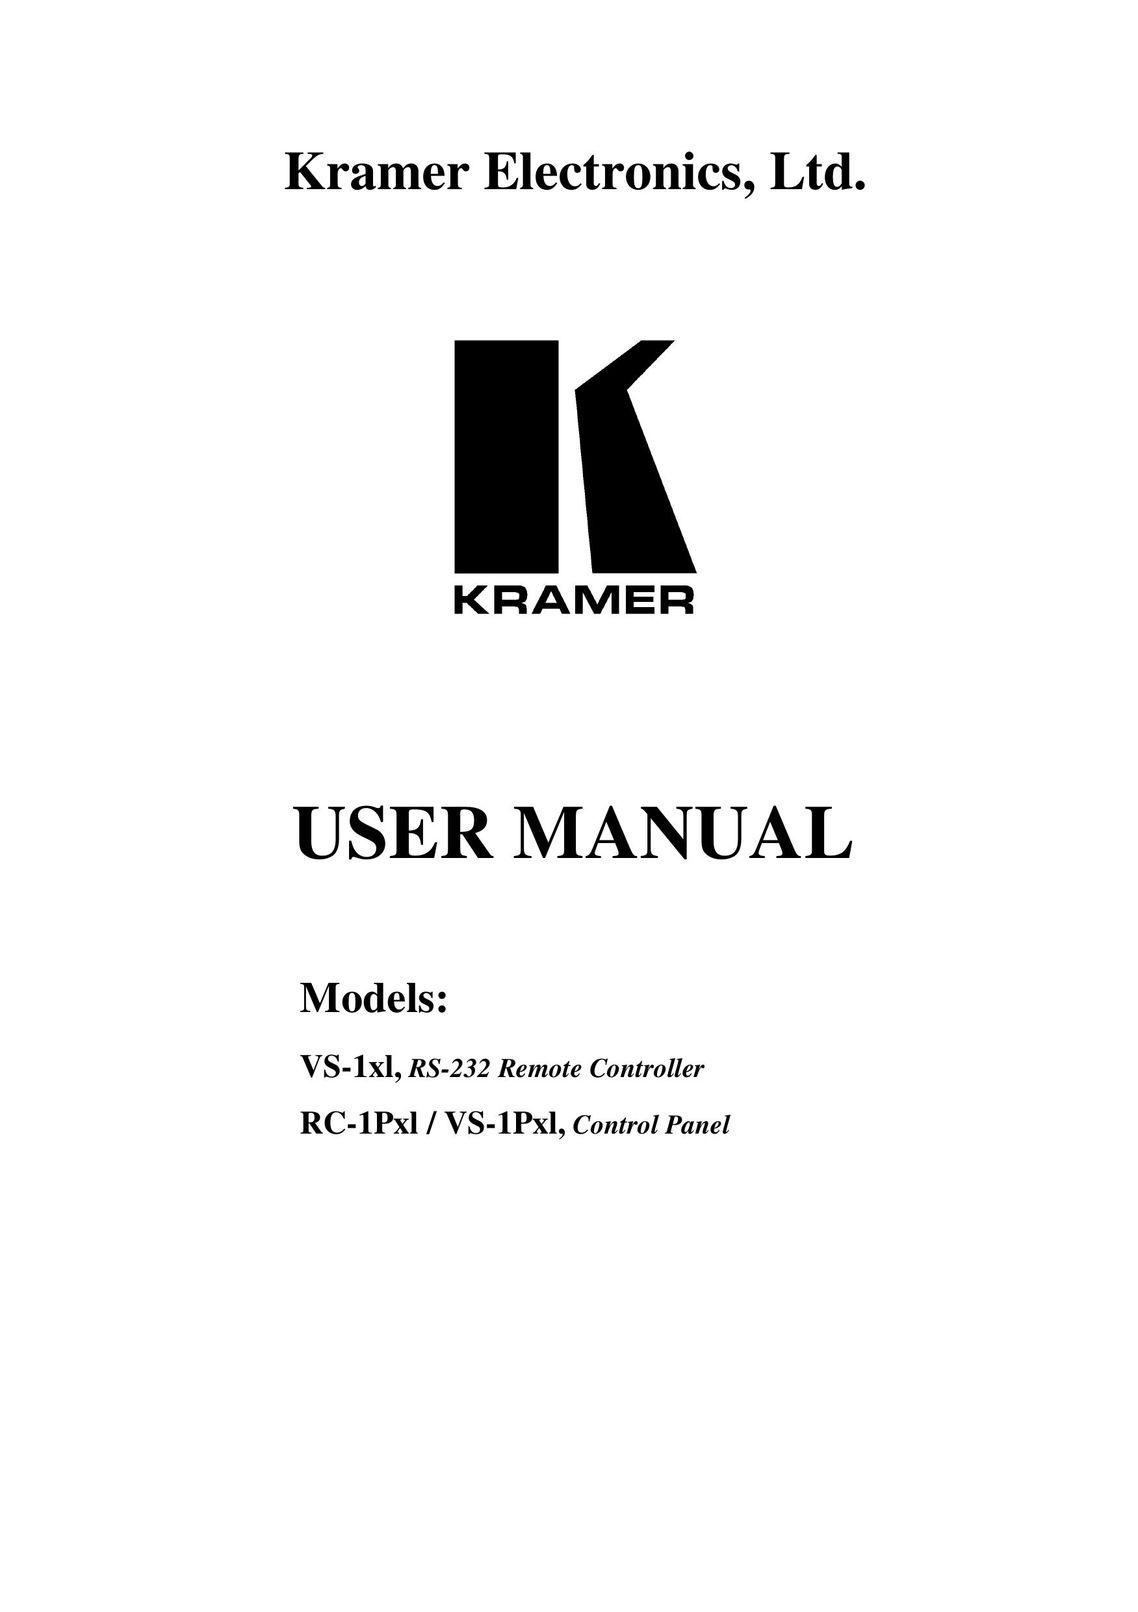 Kramer Electronics vs-1x1 Video Gaming Accessories User Manual